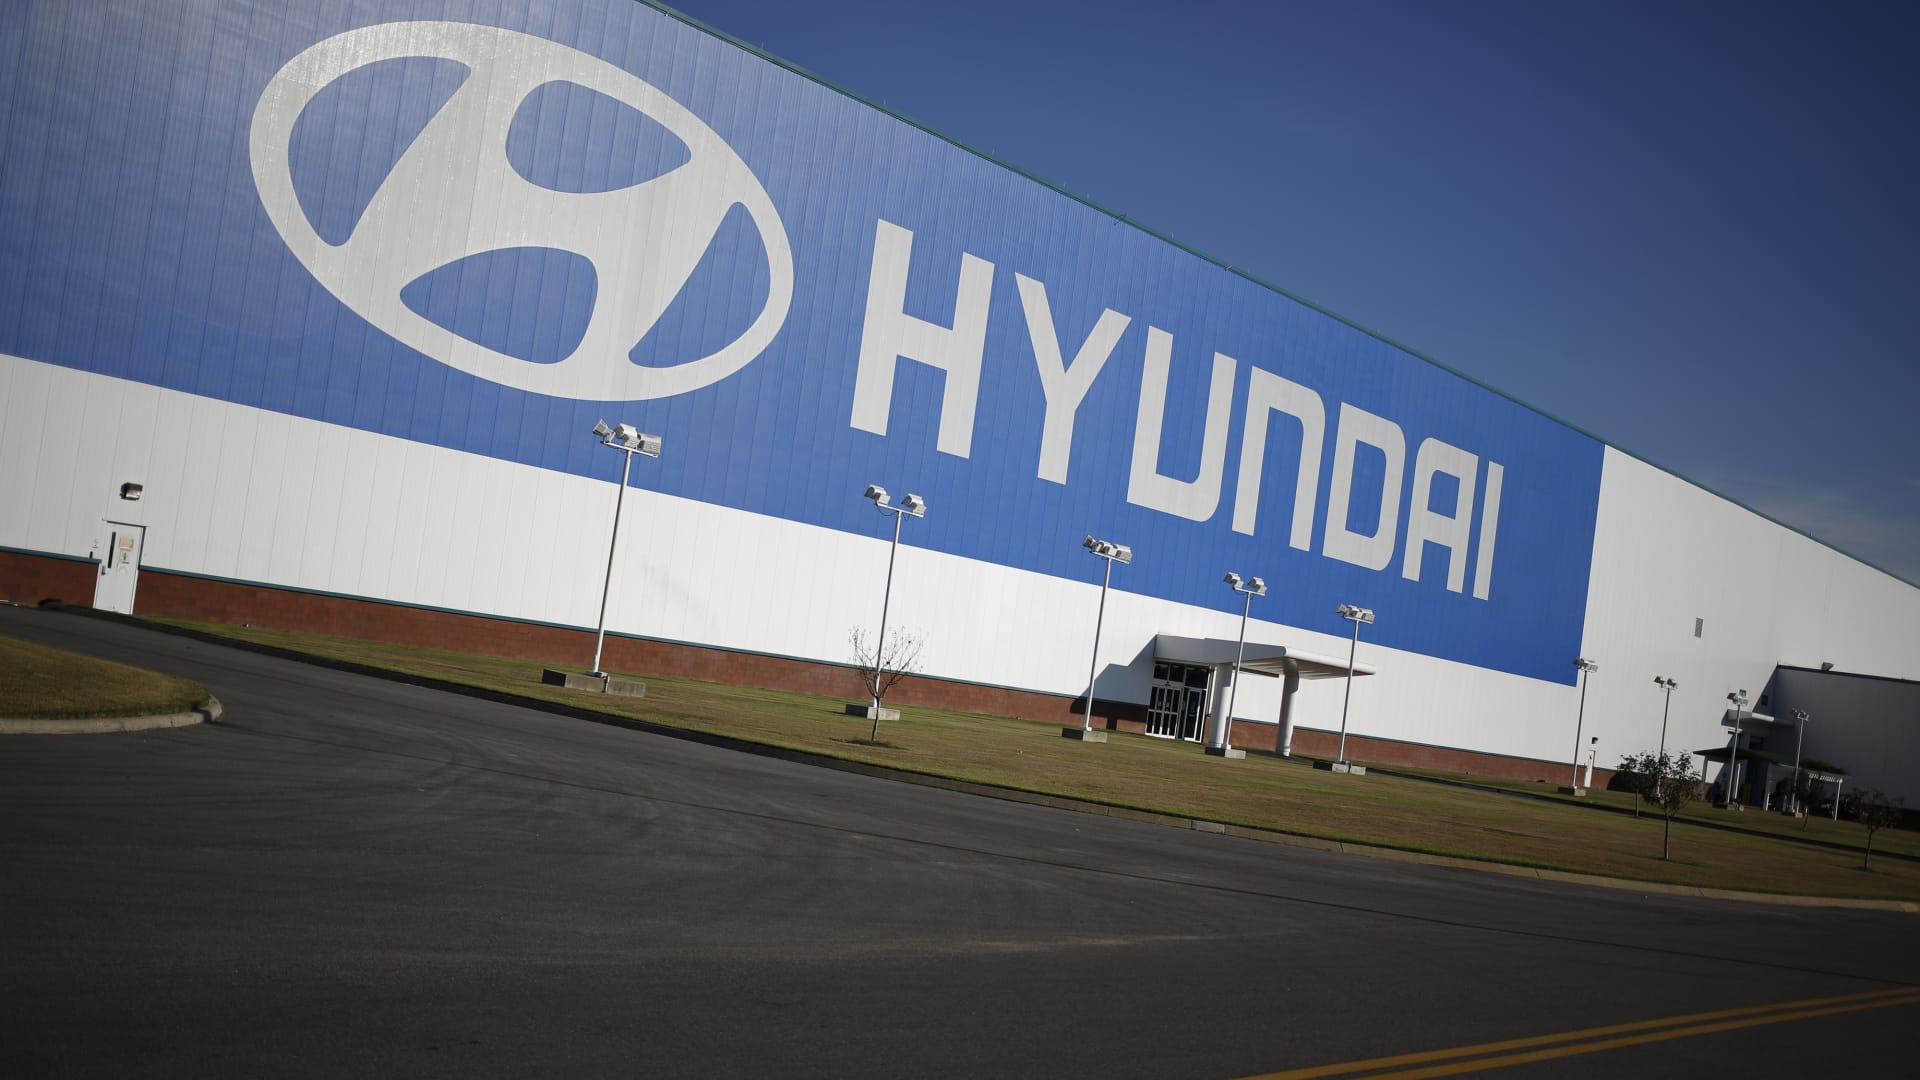 Hyundai subsidiary has used child labor at Alabama factory